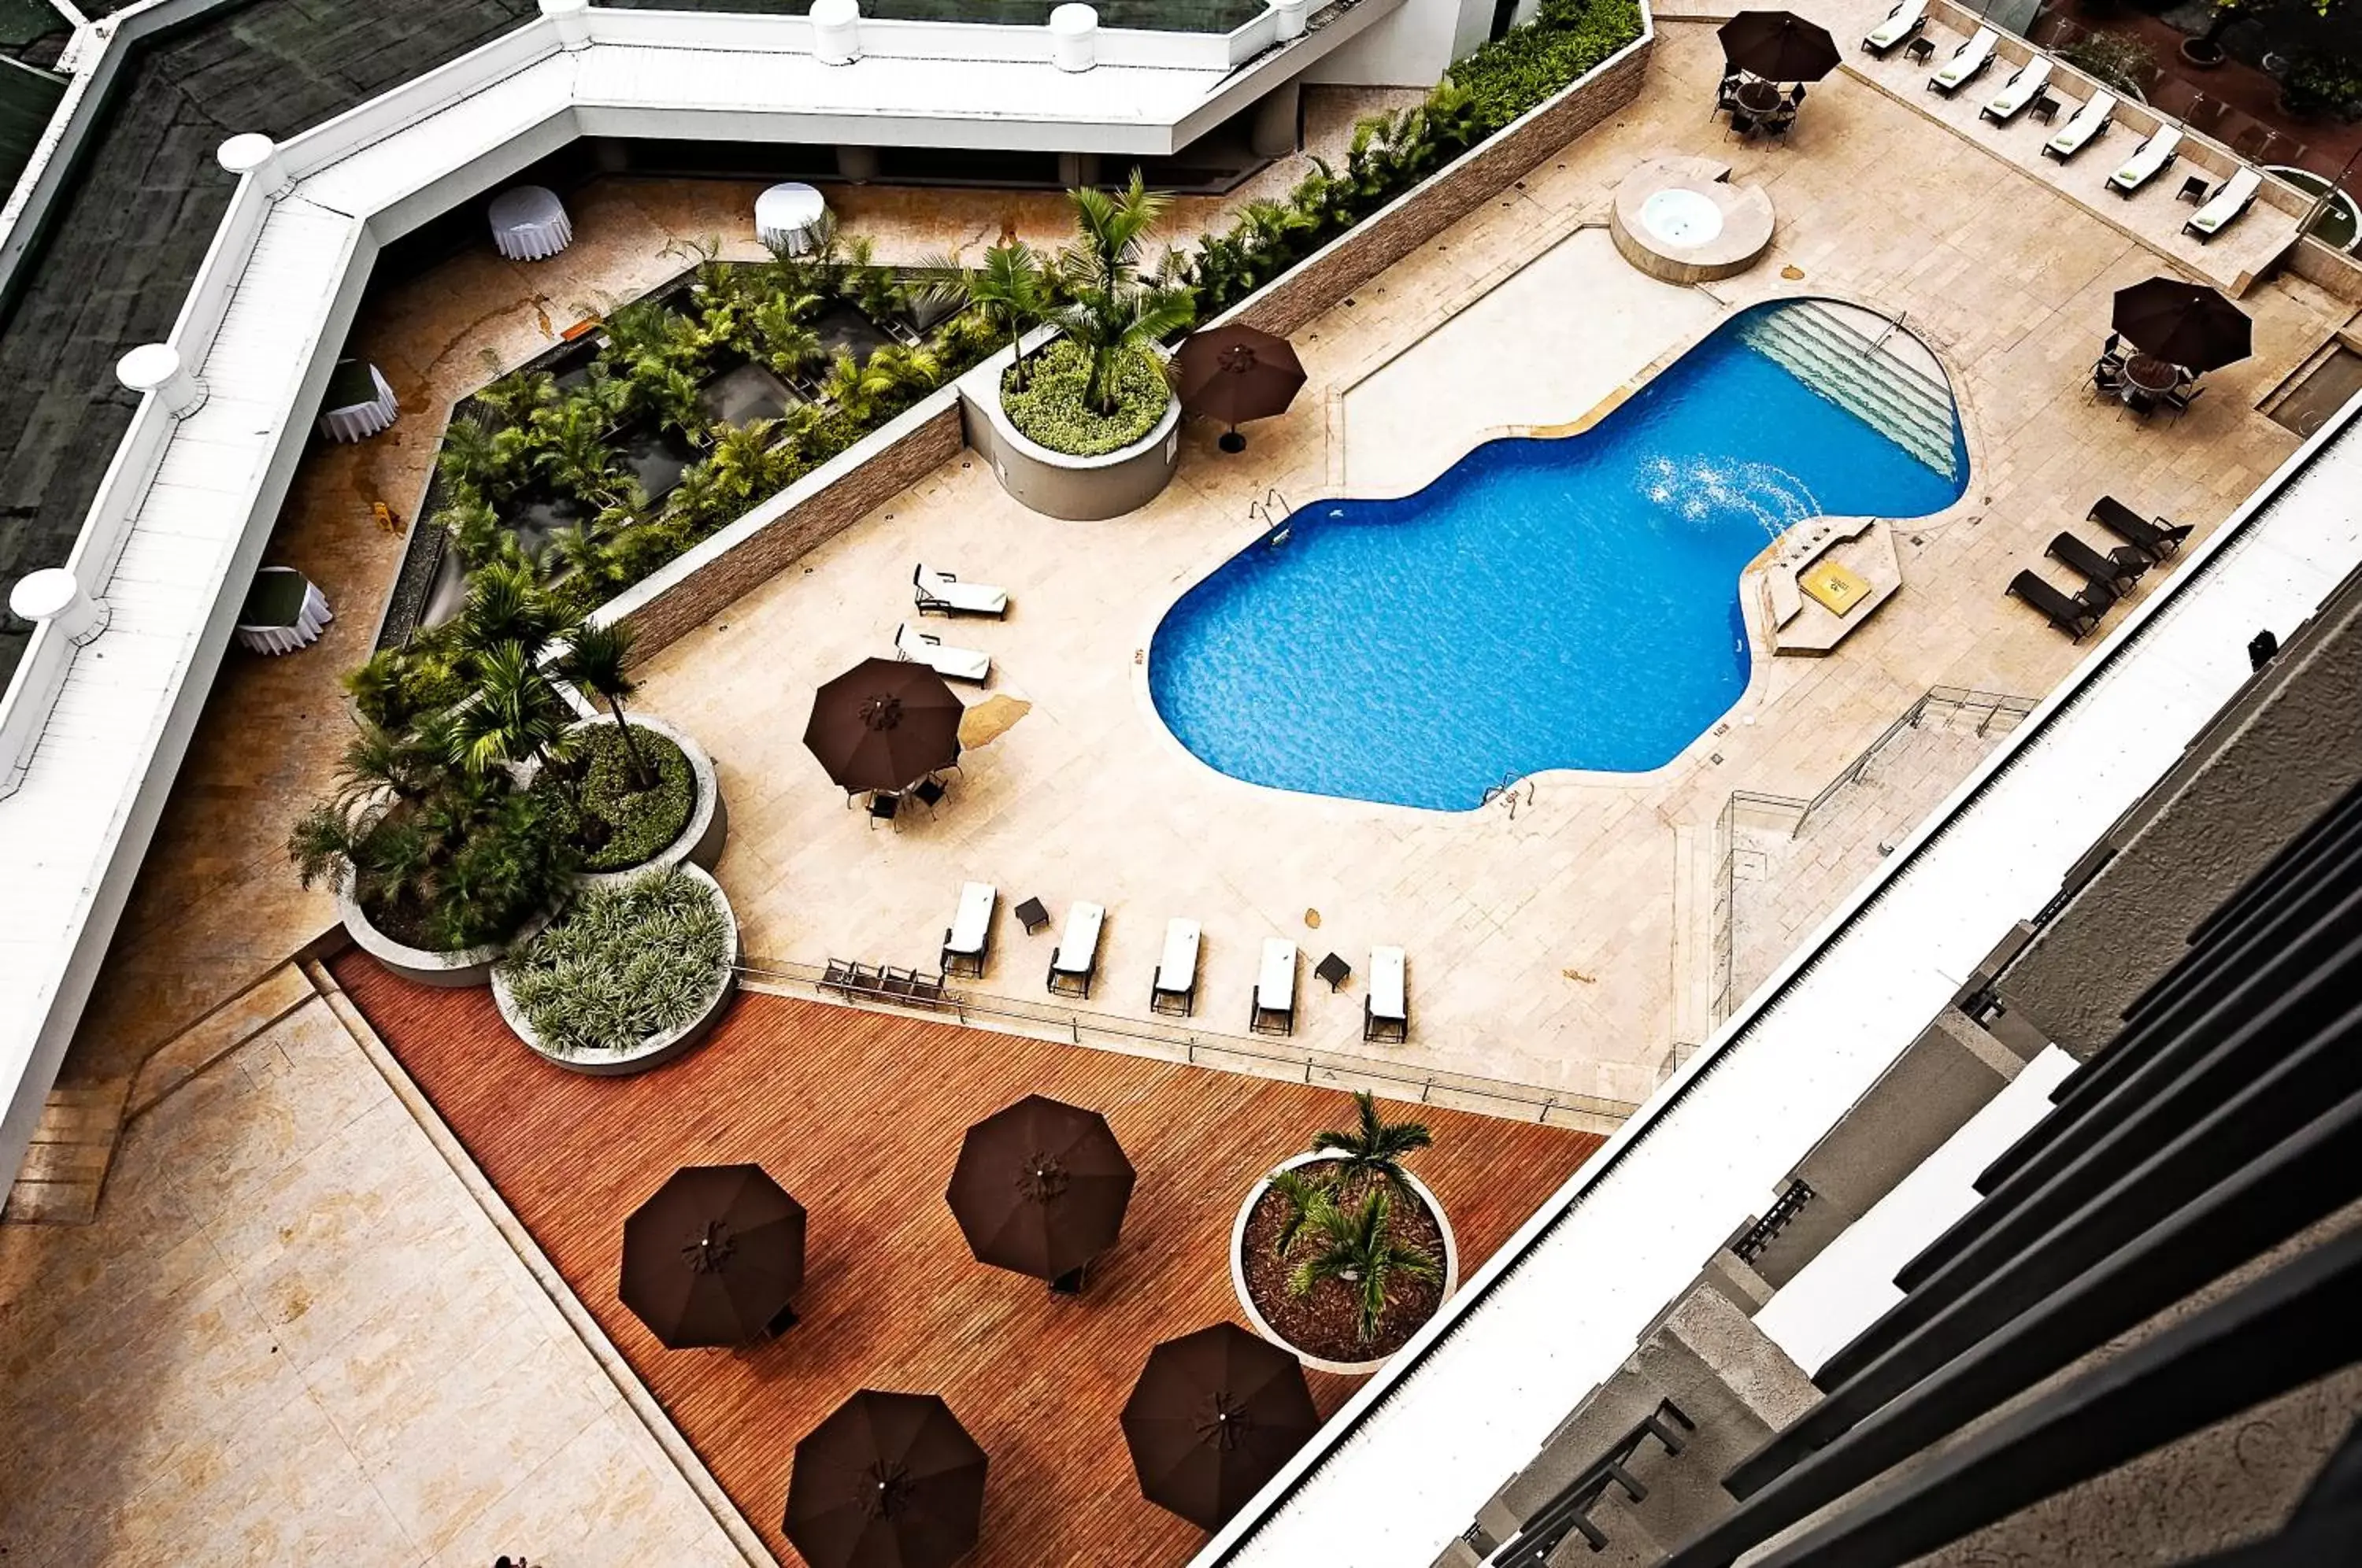 Off site, Pool View in Movich Hotel de Pereira